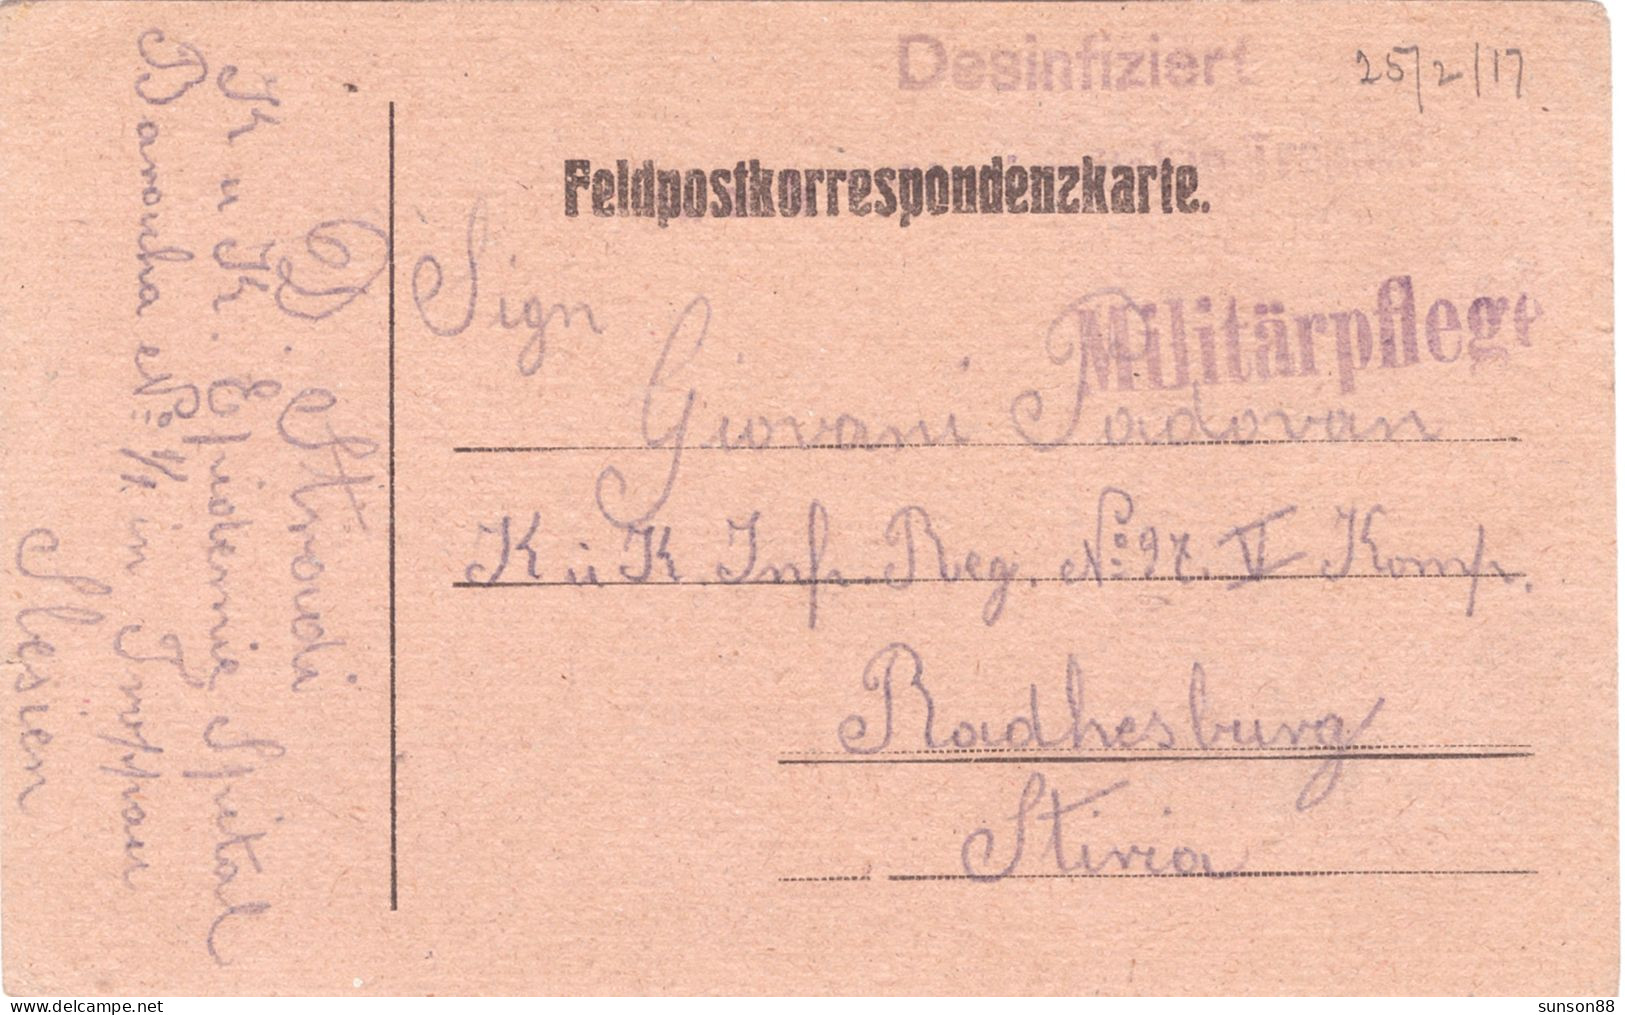 Disinfected ( Epidemic) Hospital, Field Postcard 1917  “Desinfiziert” Blue Linear Cachet  Militärpflege (1917.Feb.17). - Santé